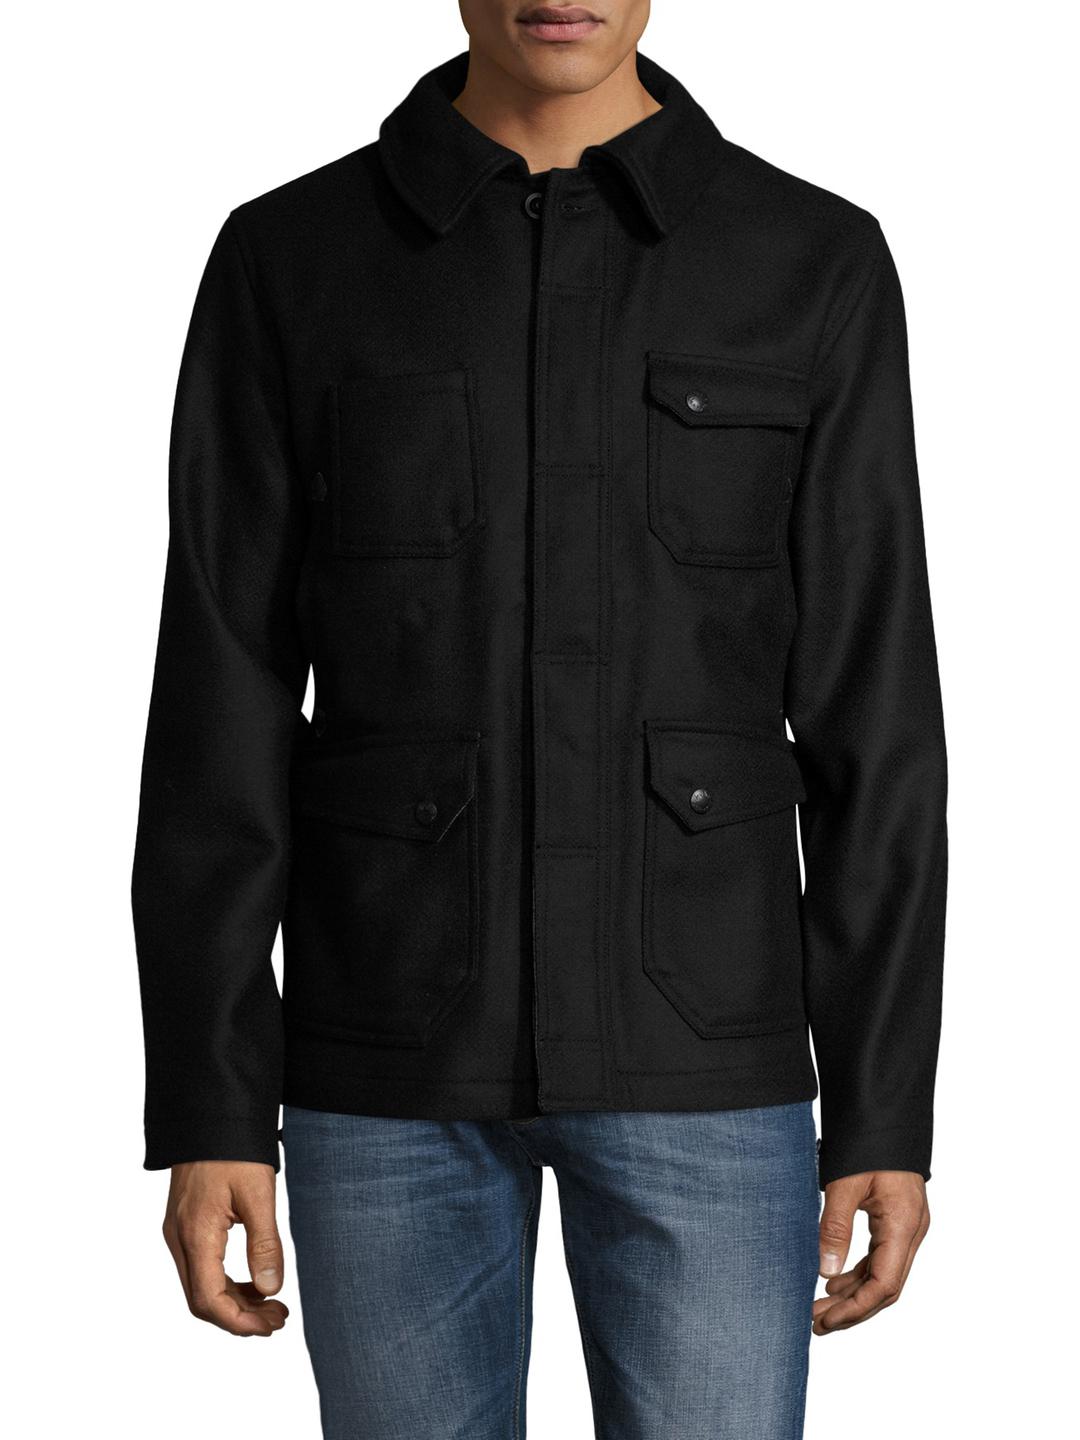 Nudie Jeans Wool Ethan Recycled Jacket in Black for Men - Lyst